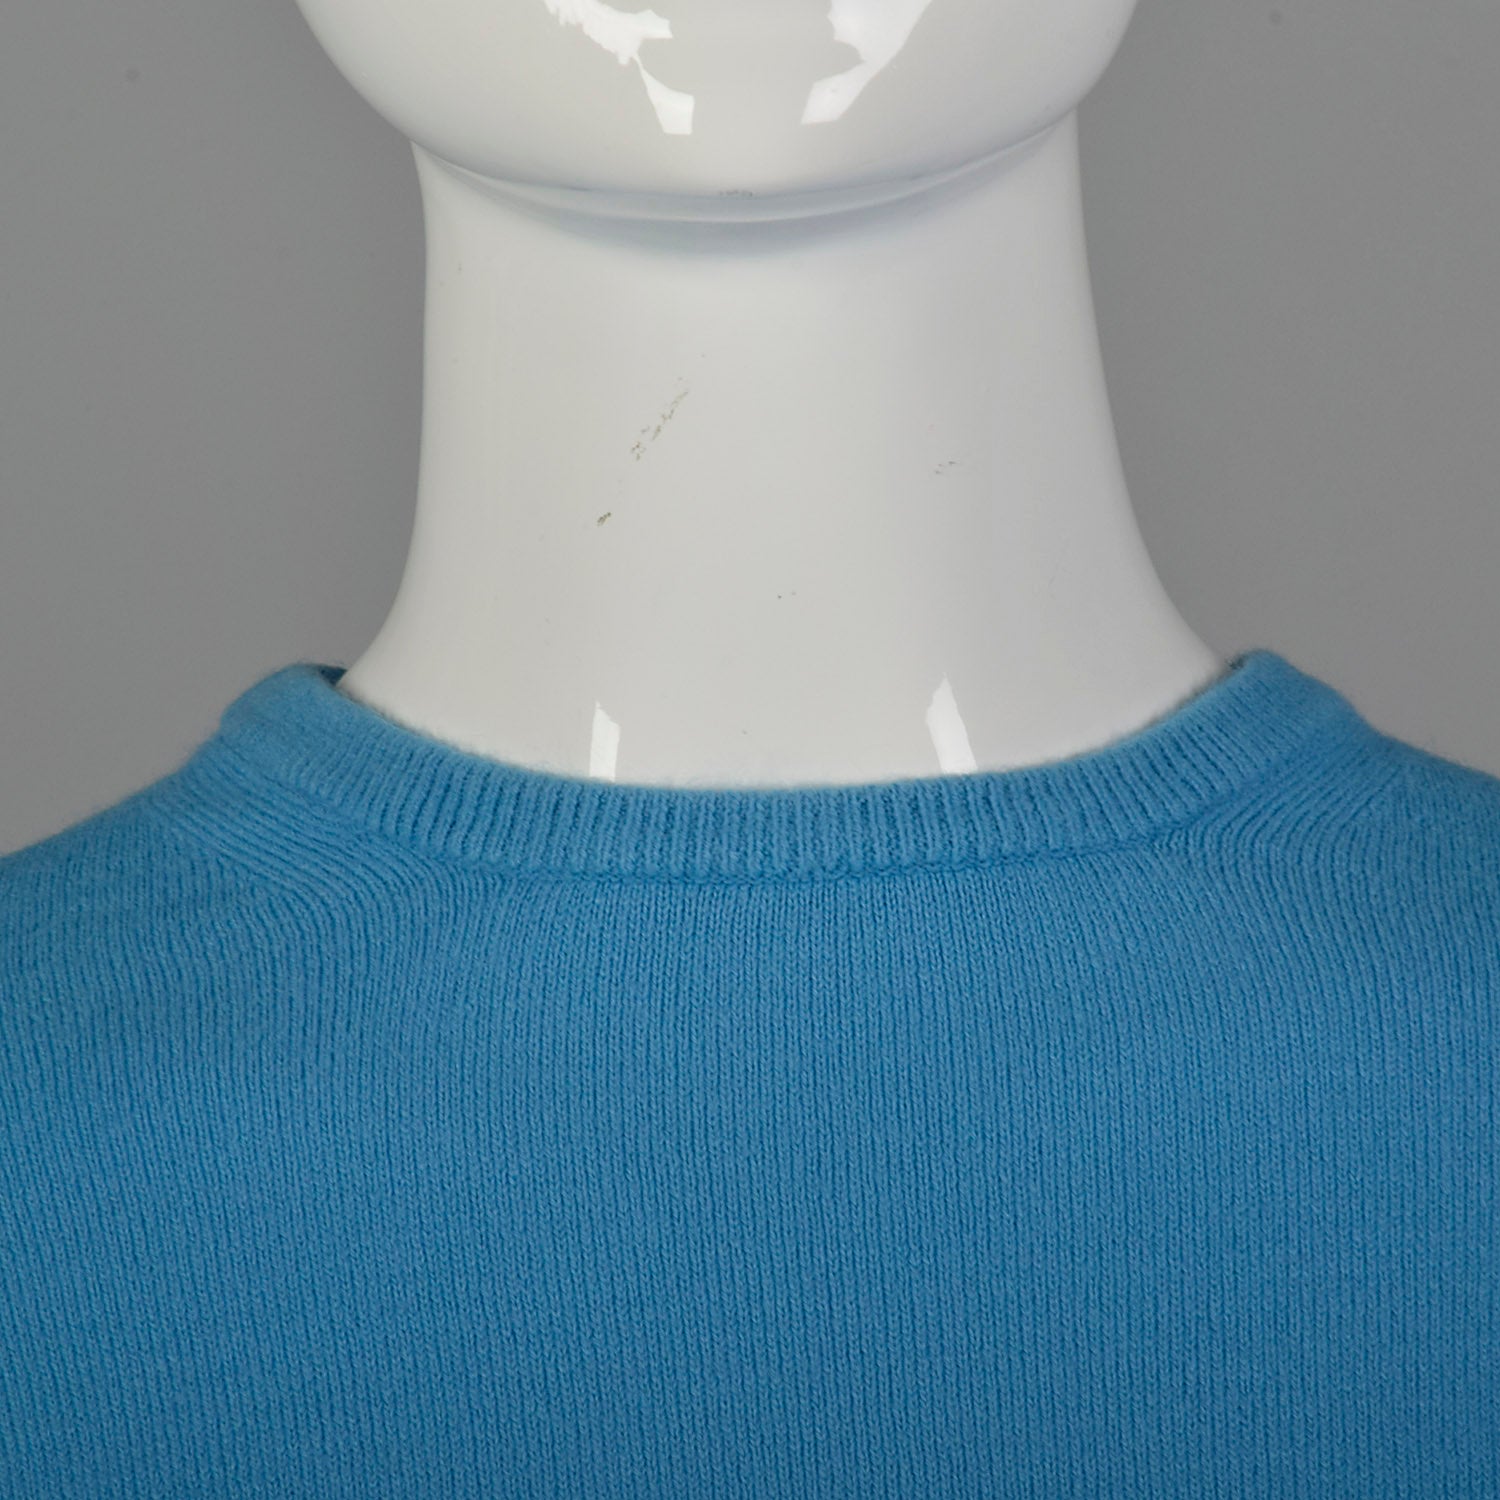 Medium 1960s Deadstock Light Blue Sweater